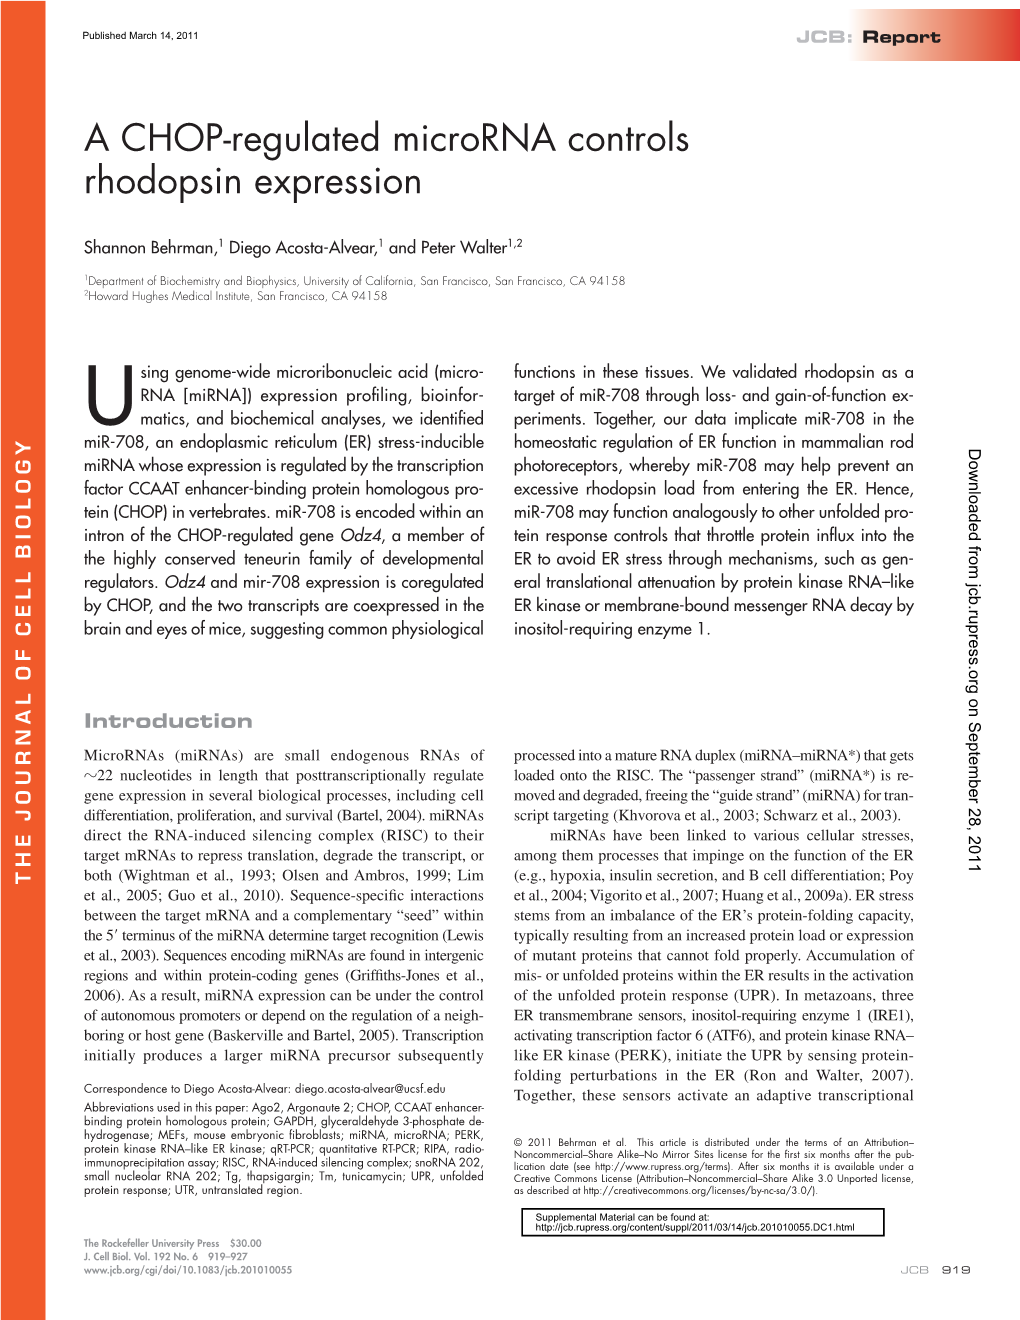 A CHOP-Regulated Microrna Controls Rhodopsin Expression